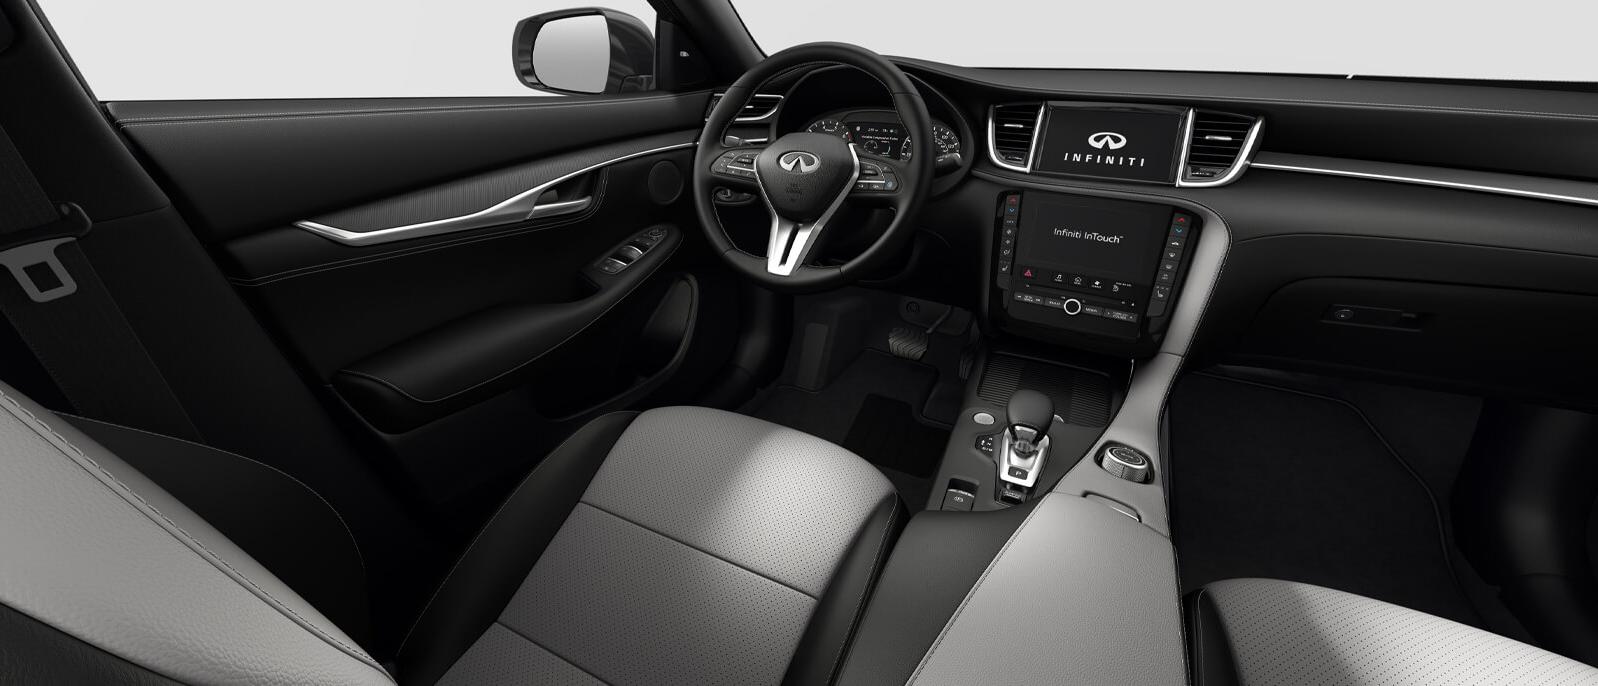 INFINITI QX55 Luxe trim interior in Stone color scheme.